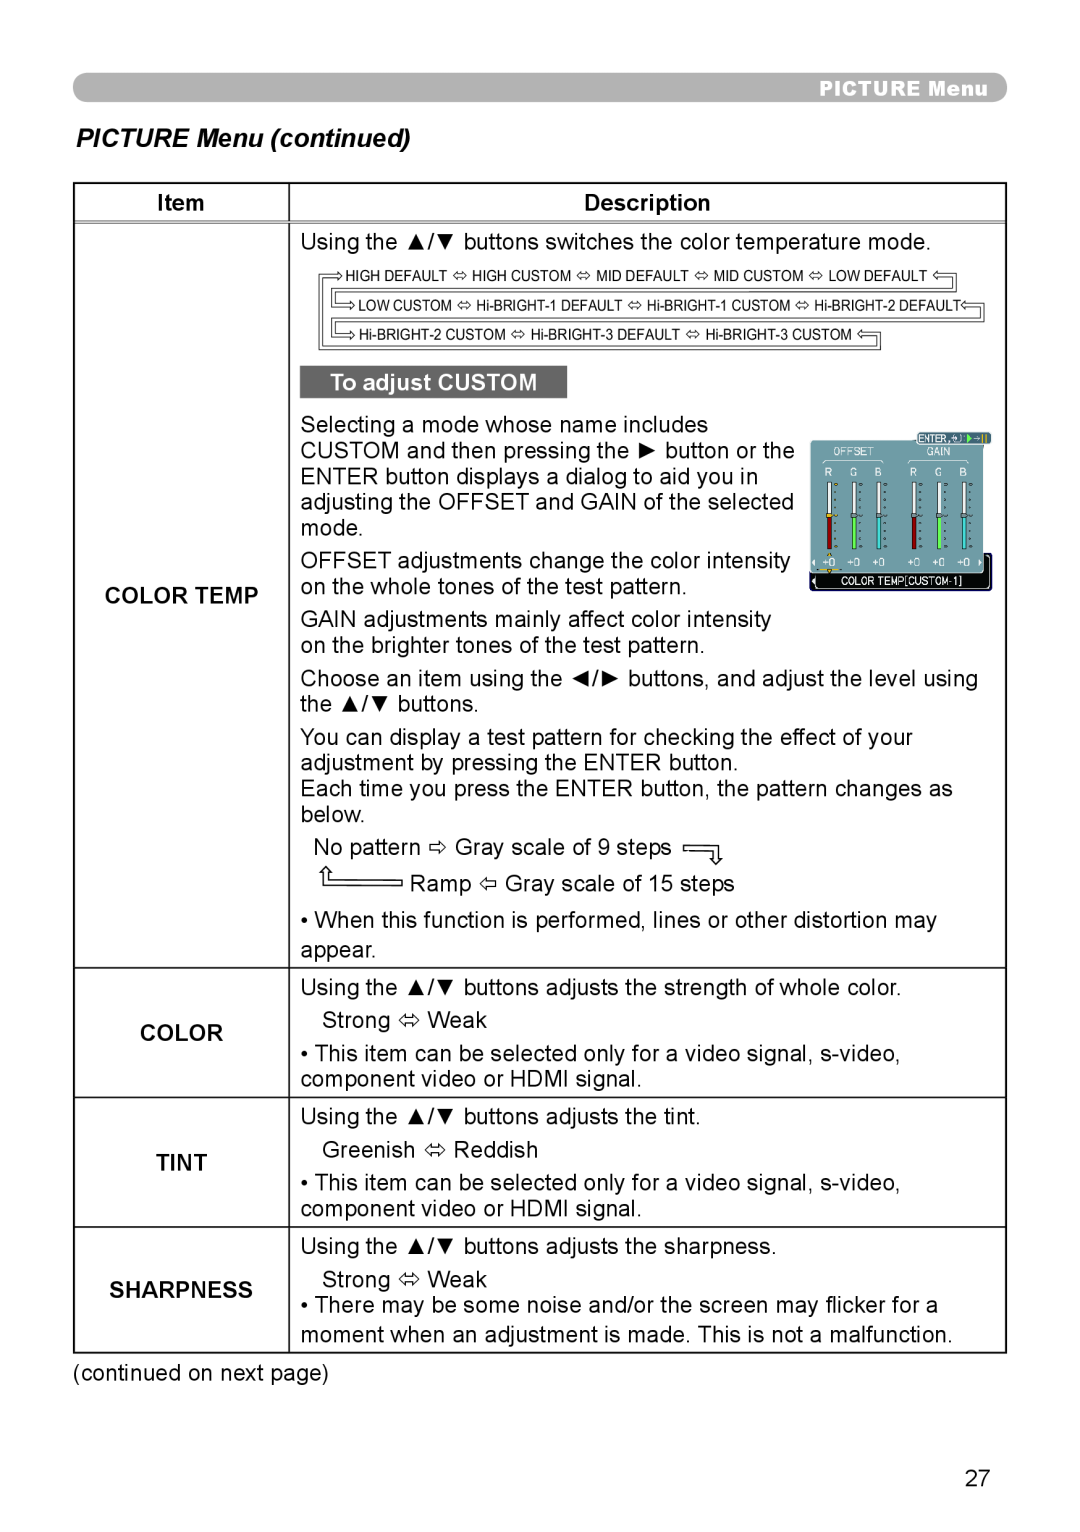 Planar PR9020 user manual PICTURE Menu continued, Description, To adjust CUSTOM, Color Temp, Tint, Sharpness 